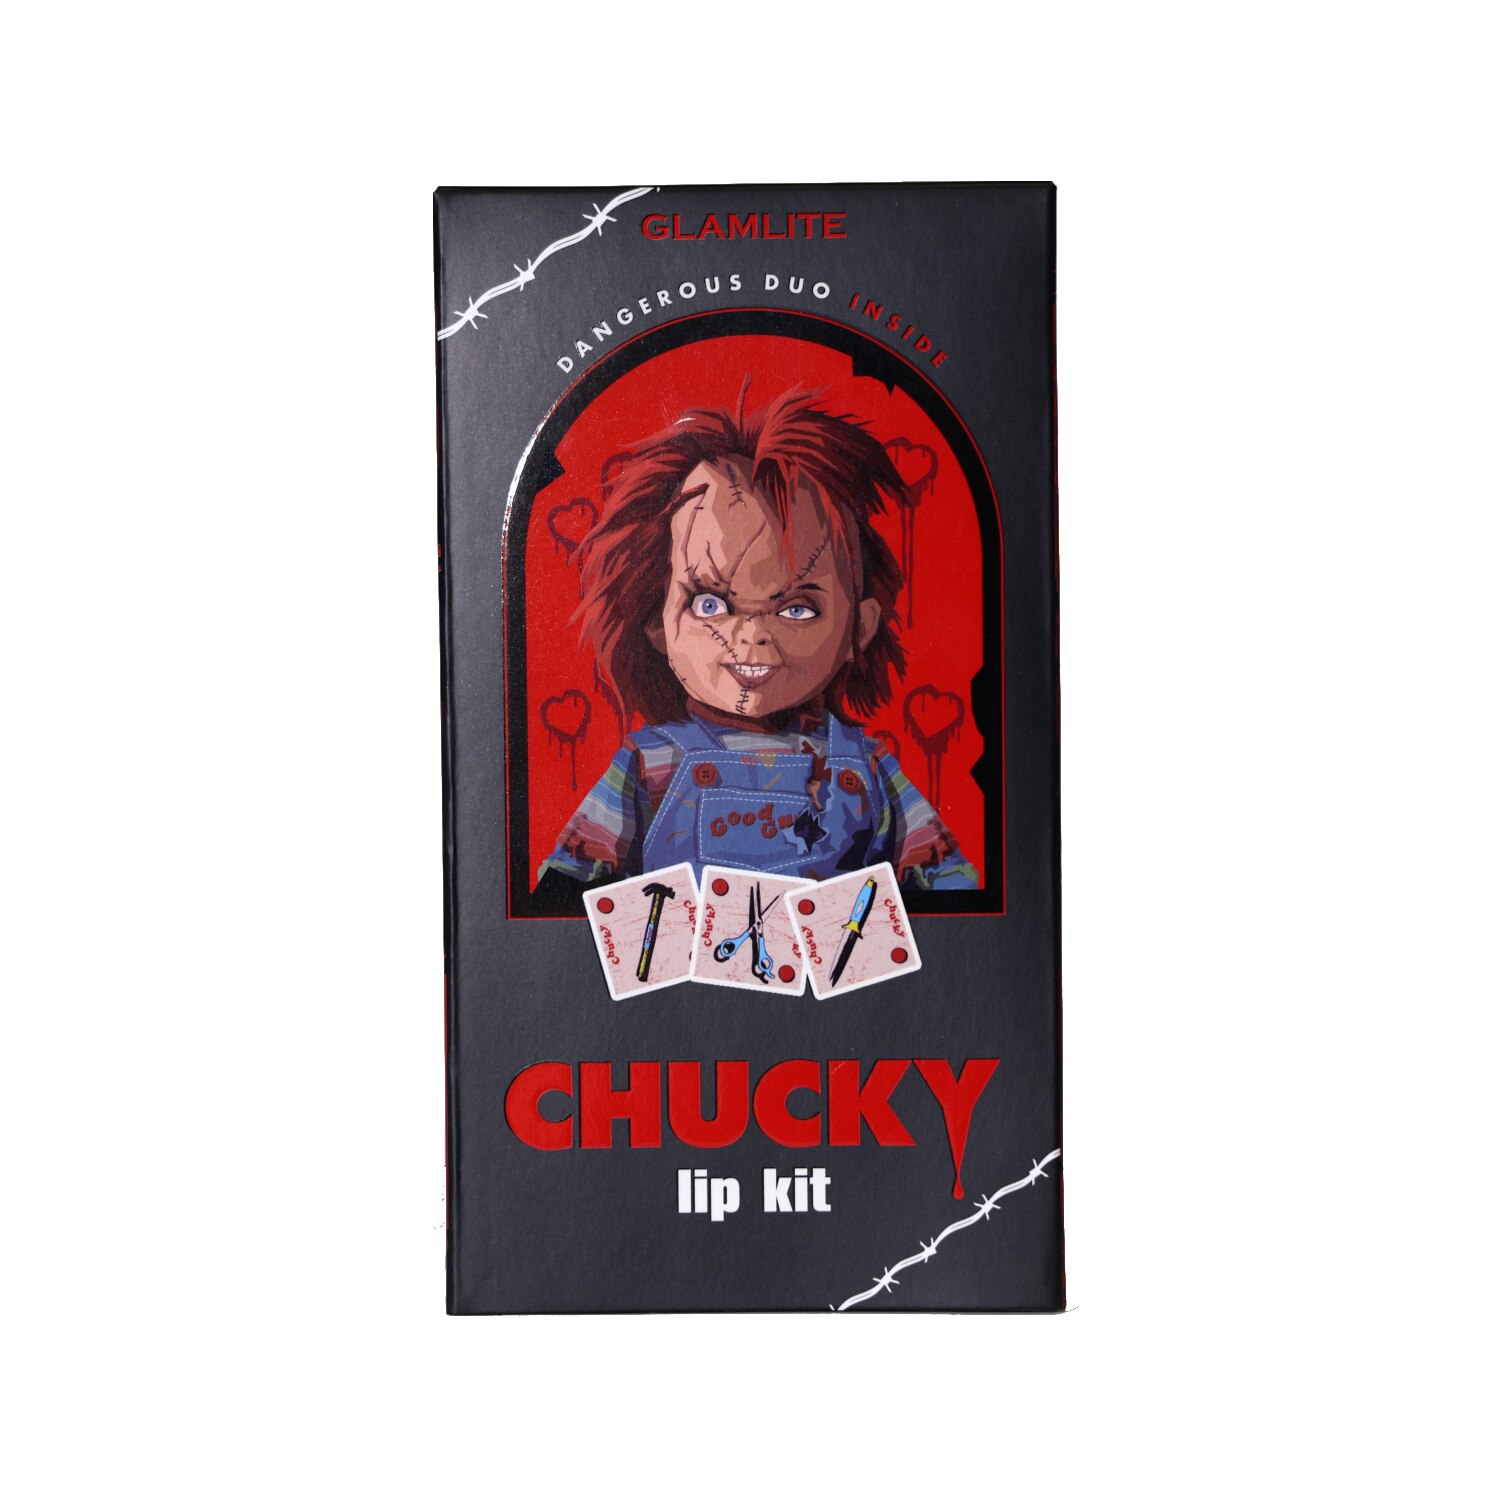 Chucky x Glamlite Lip Kit, Chucky